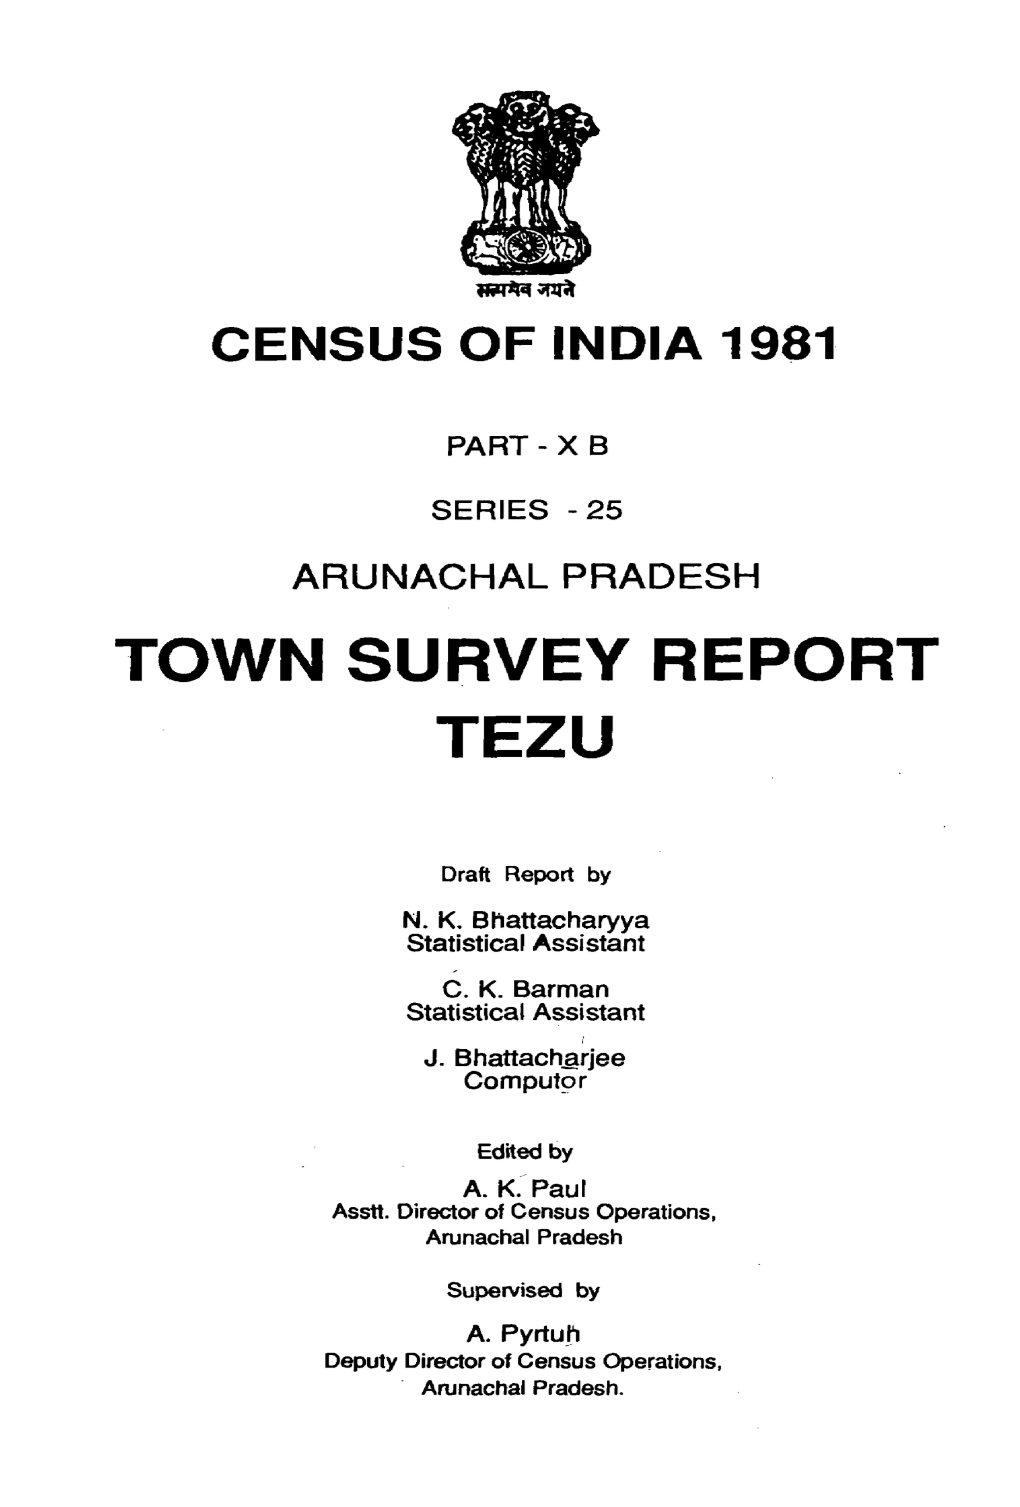 Town Survey Report Tezu, Part X-B, Series-25, Arunachal Pradesh